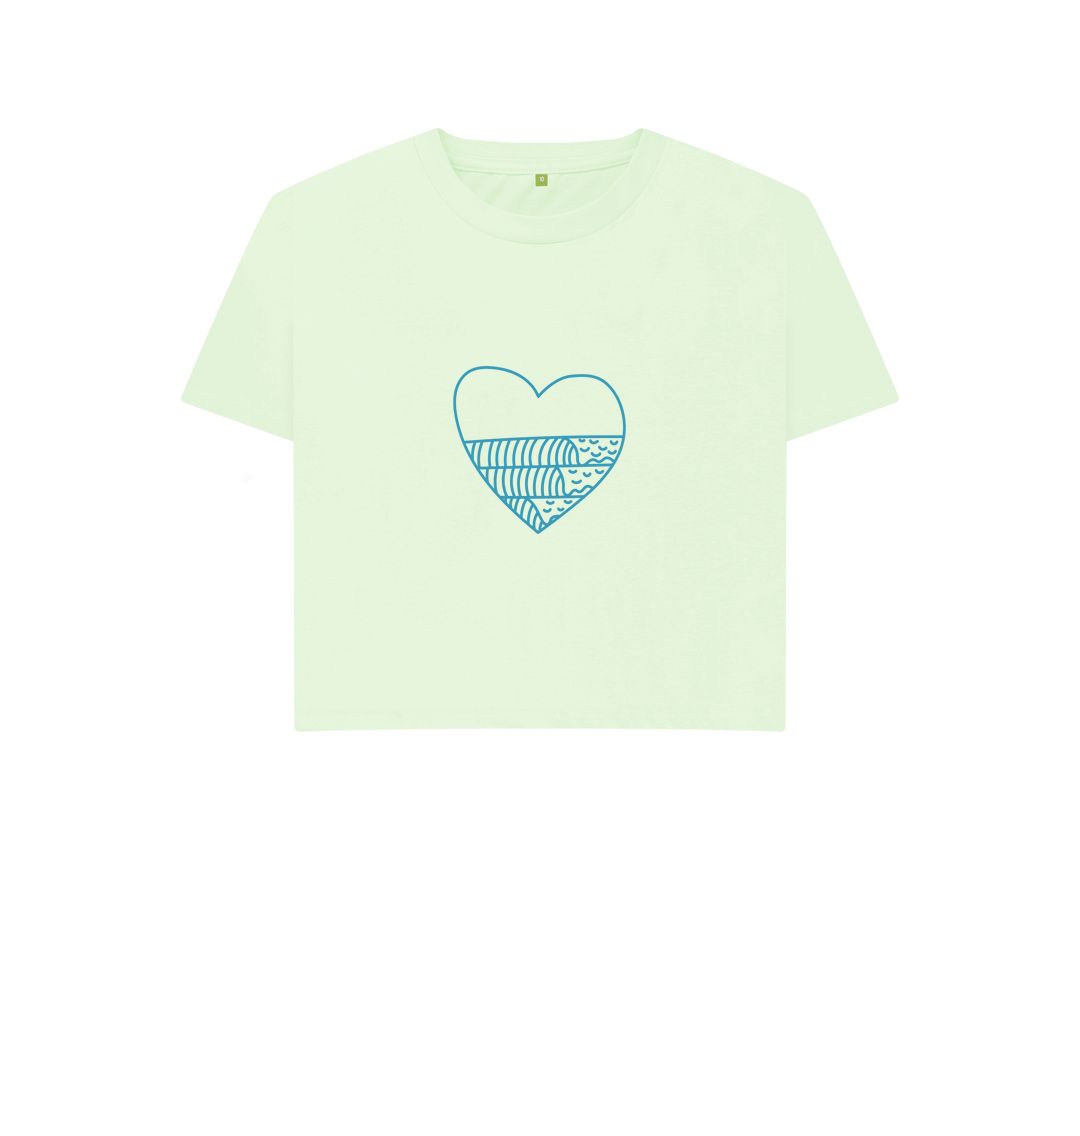 Pastel Green \\\"Keep the Seas Plastic Free\\\" Crop Top for Women & Girls | Organic Fairtrade Cotton